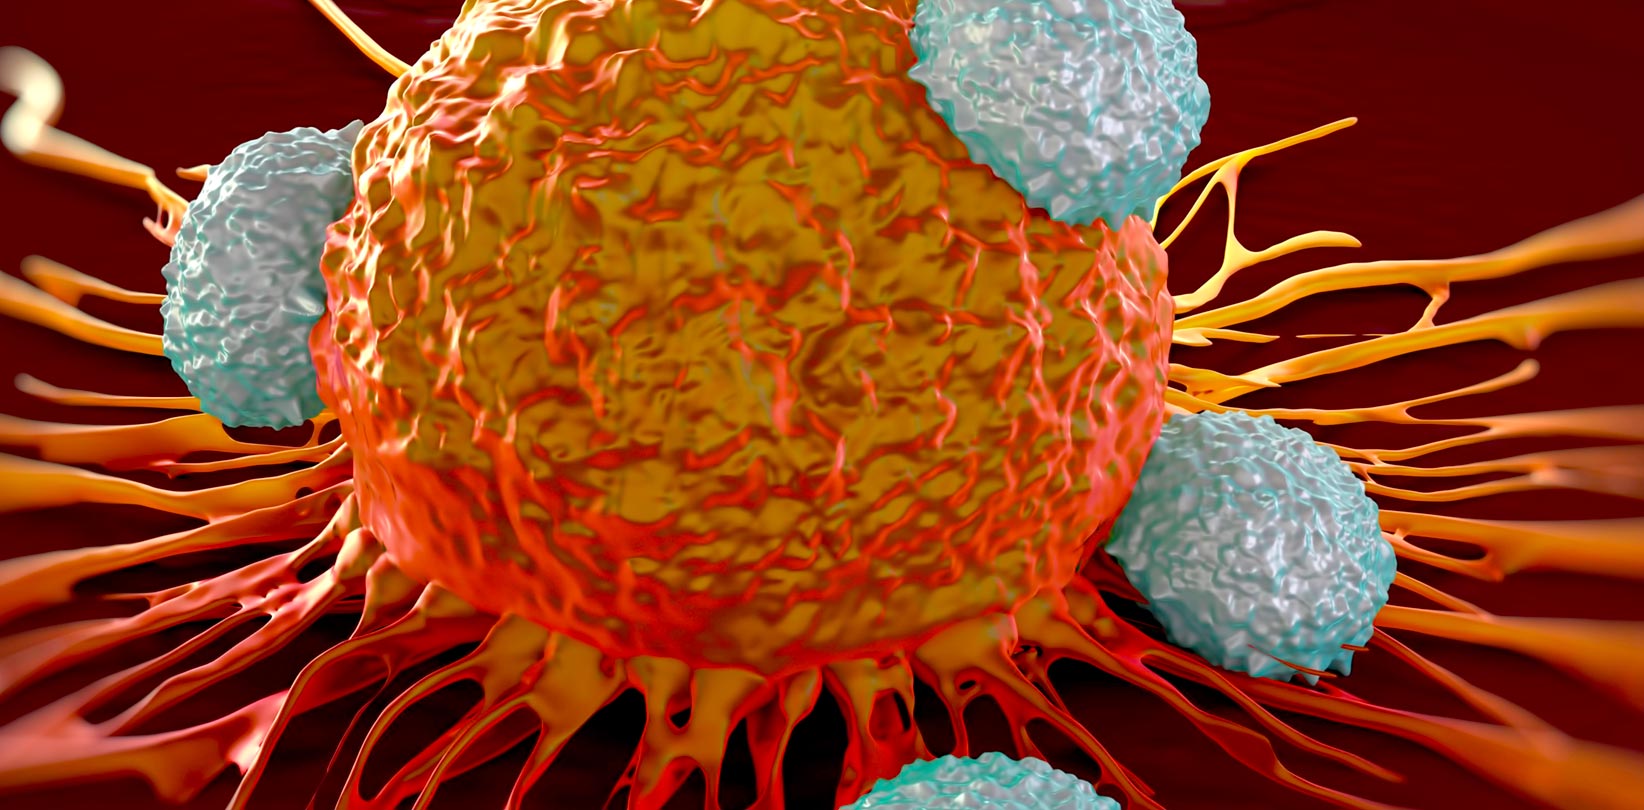 engineered T cells